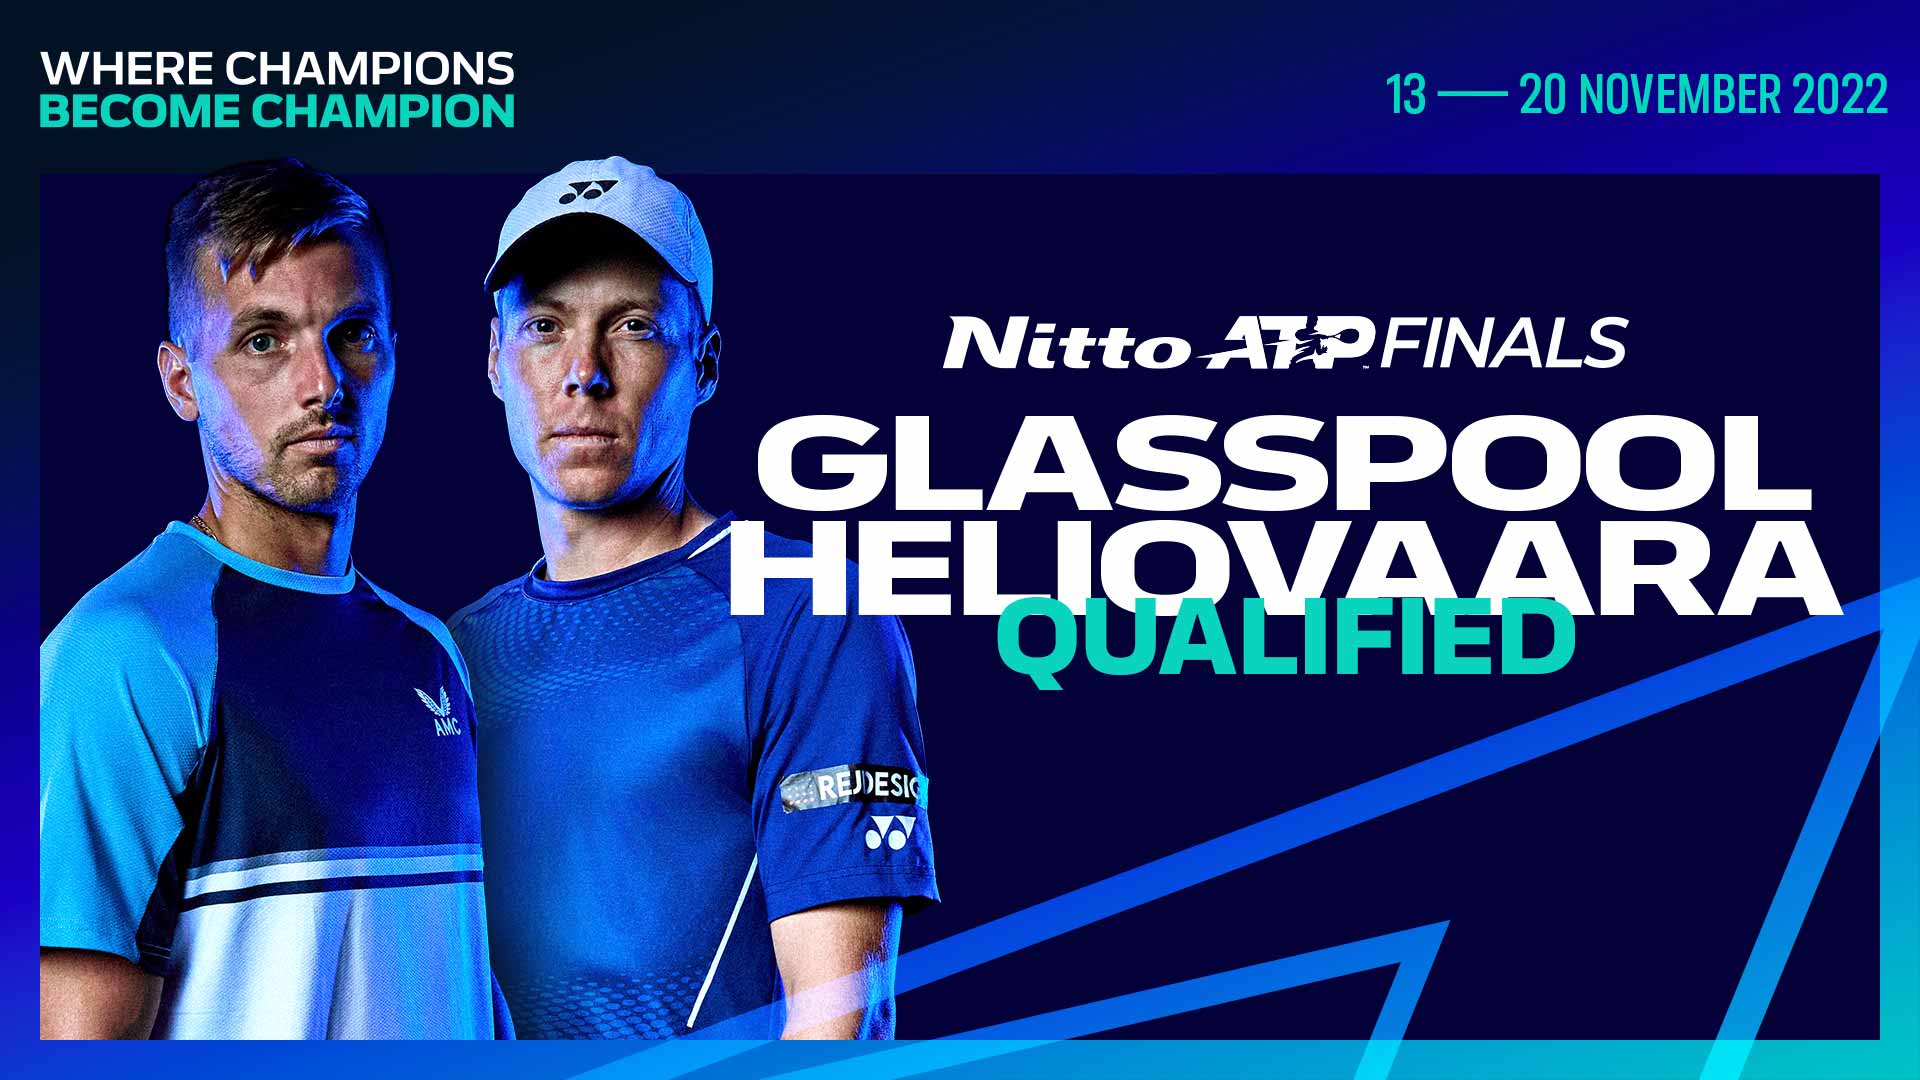 Glasspool/Heliovaara To Make Nitto ATP Finals Debut News Article Nitto ATP Finals Tennis